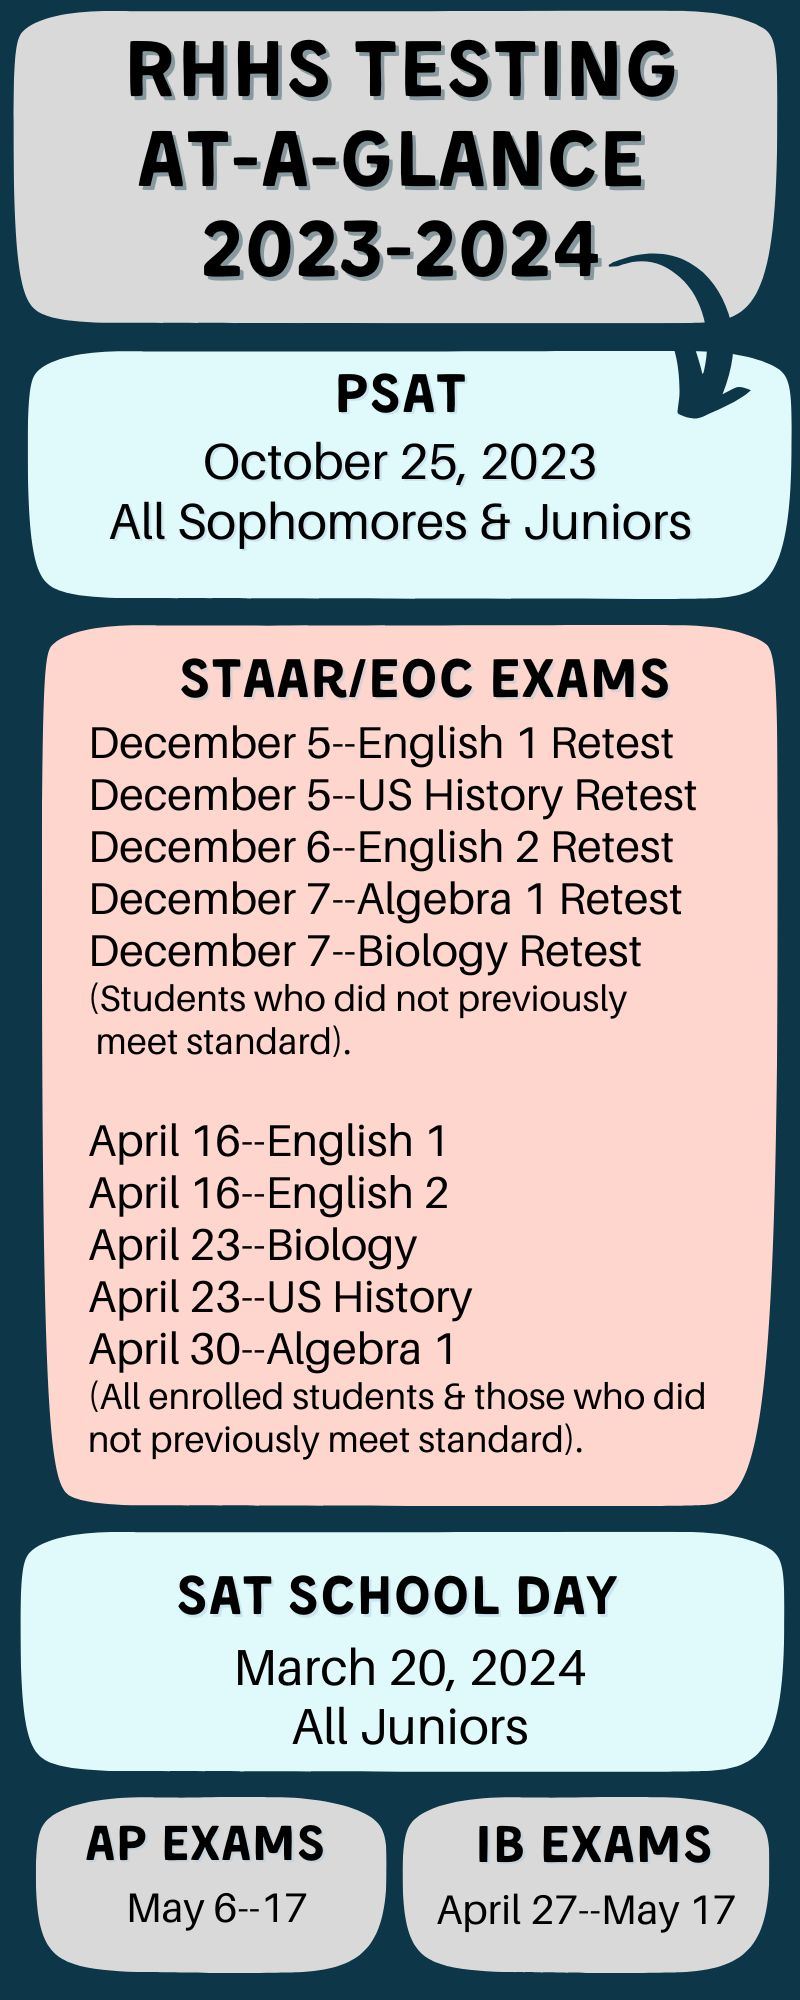 Test Dates